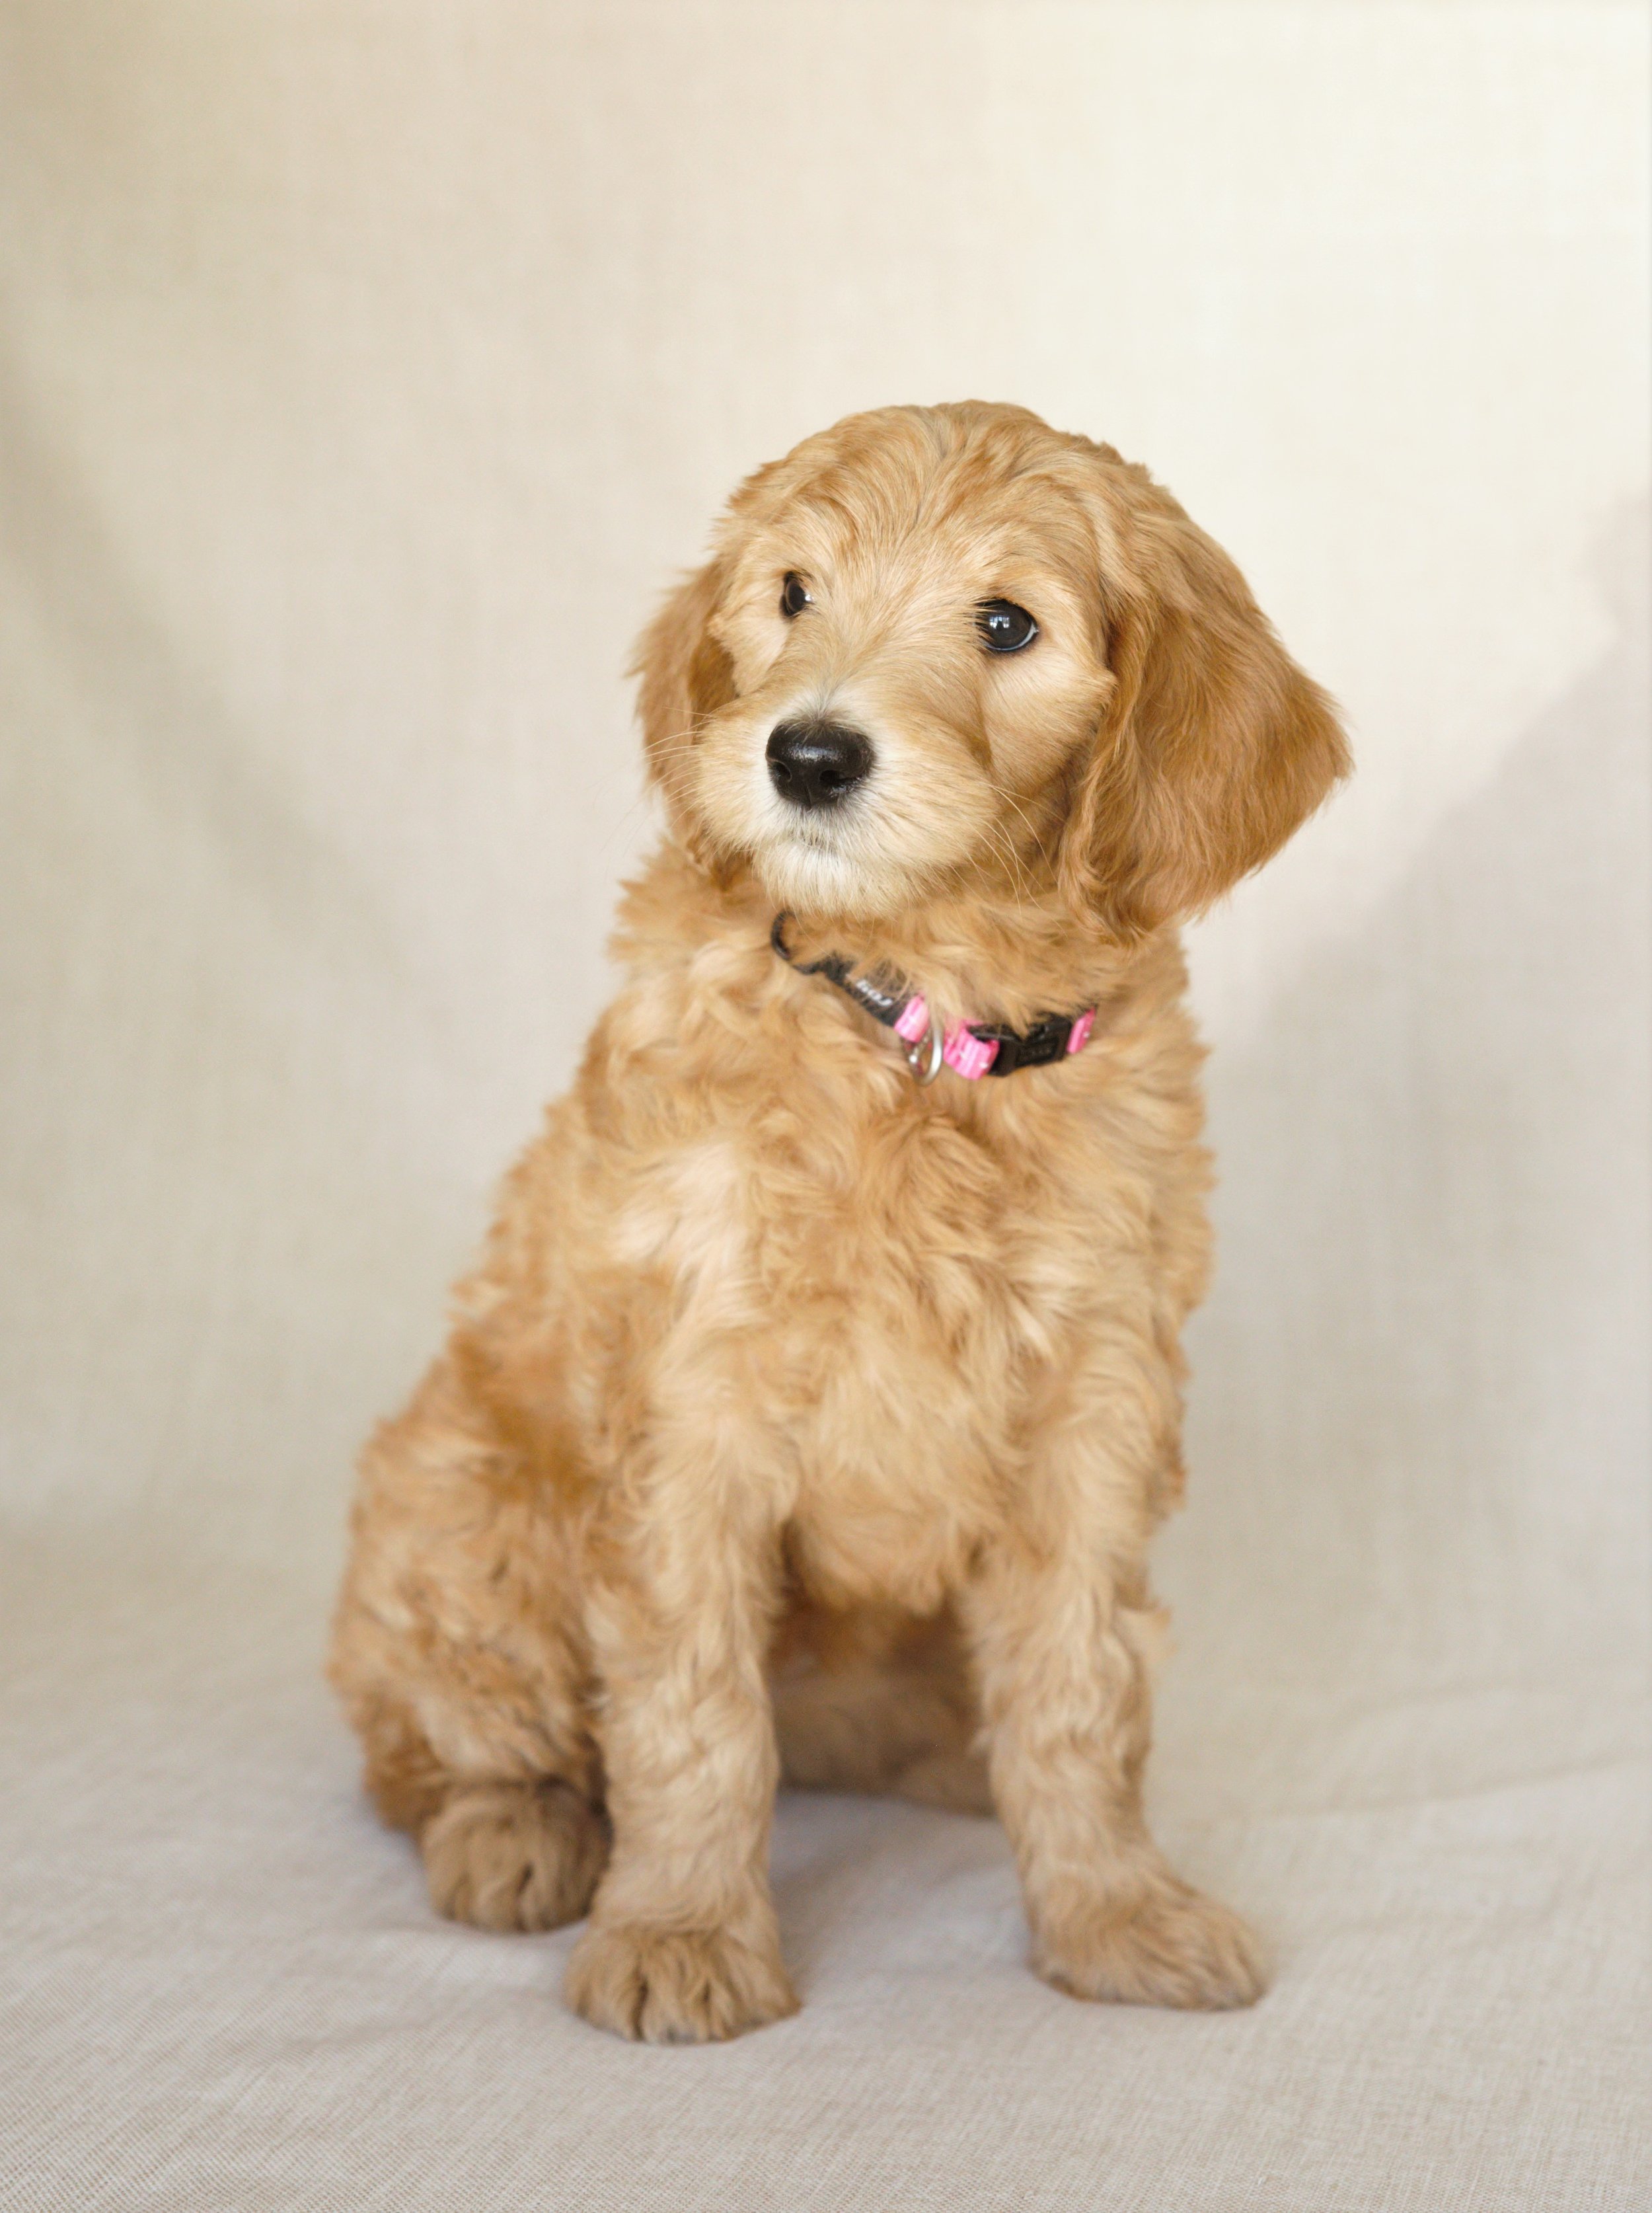 Best Goldendoodle Puppy Supplies & Accessories (2023) - Happy-Go-Doodle®